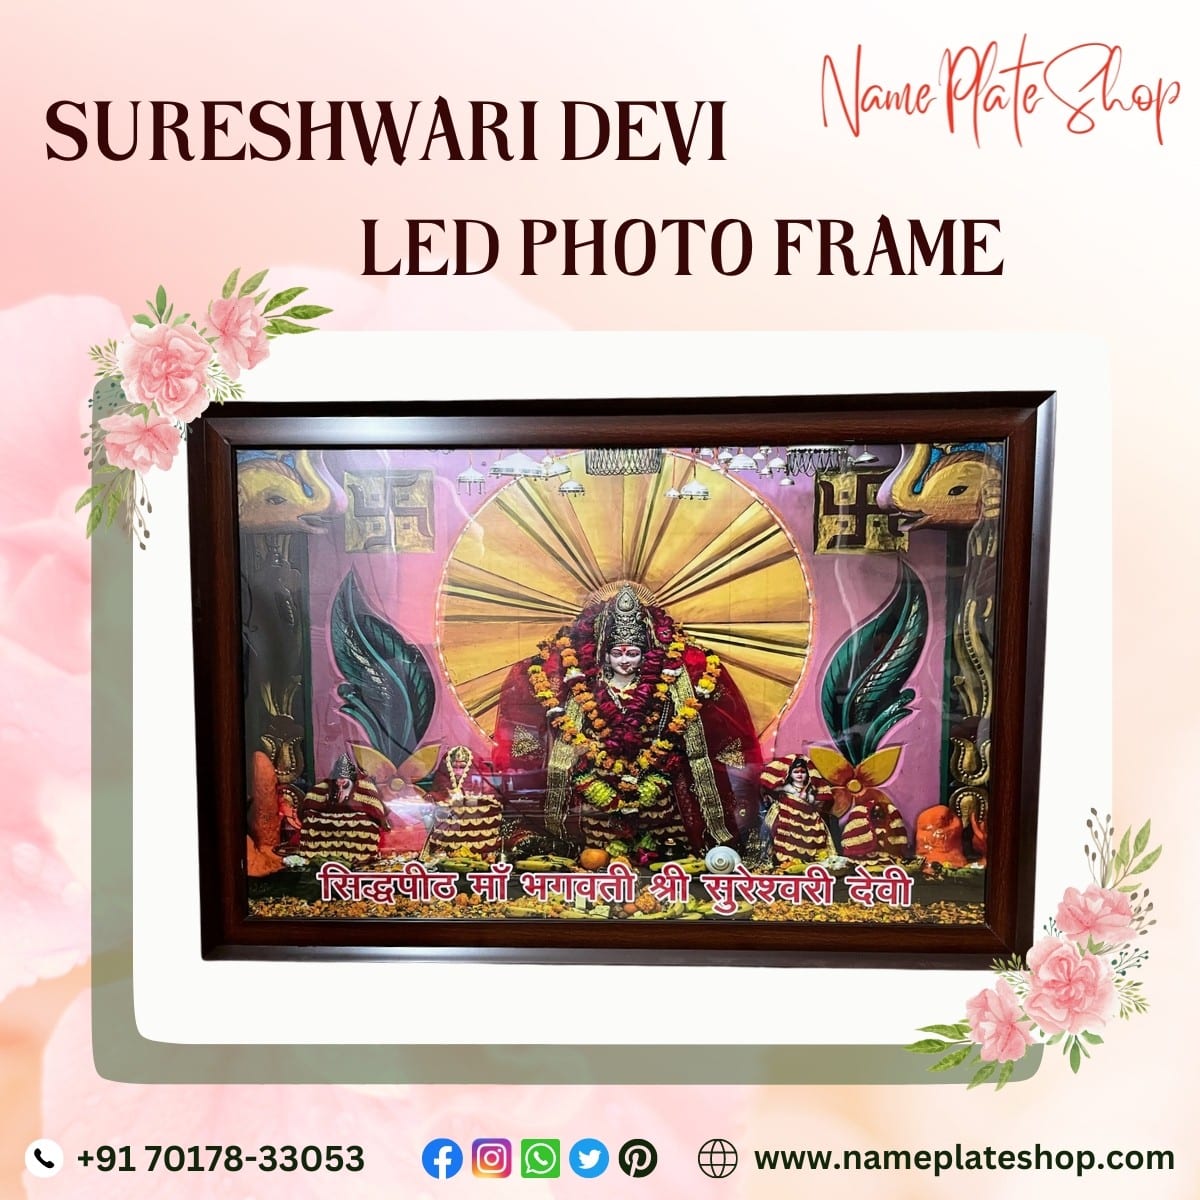 Sureshwari Devi LED Photo Frame Timeless Piece Of Art